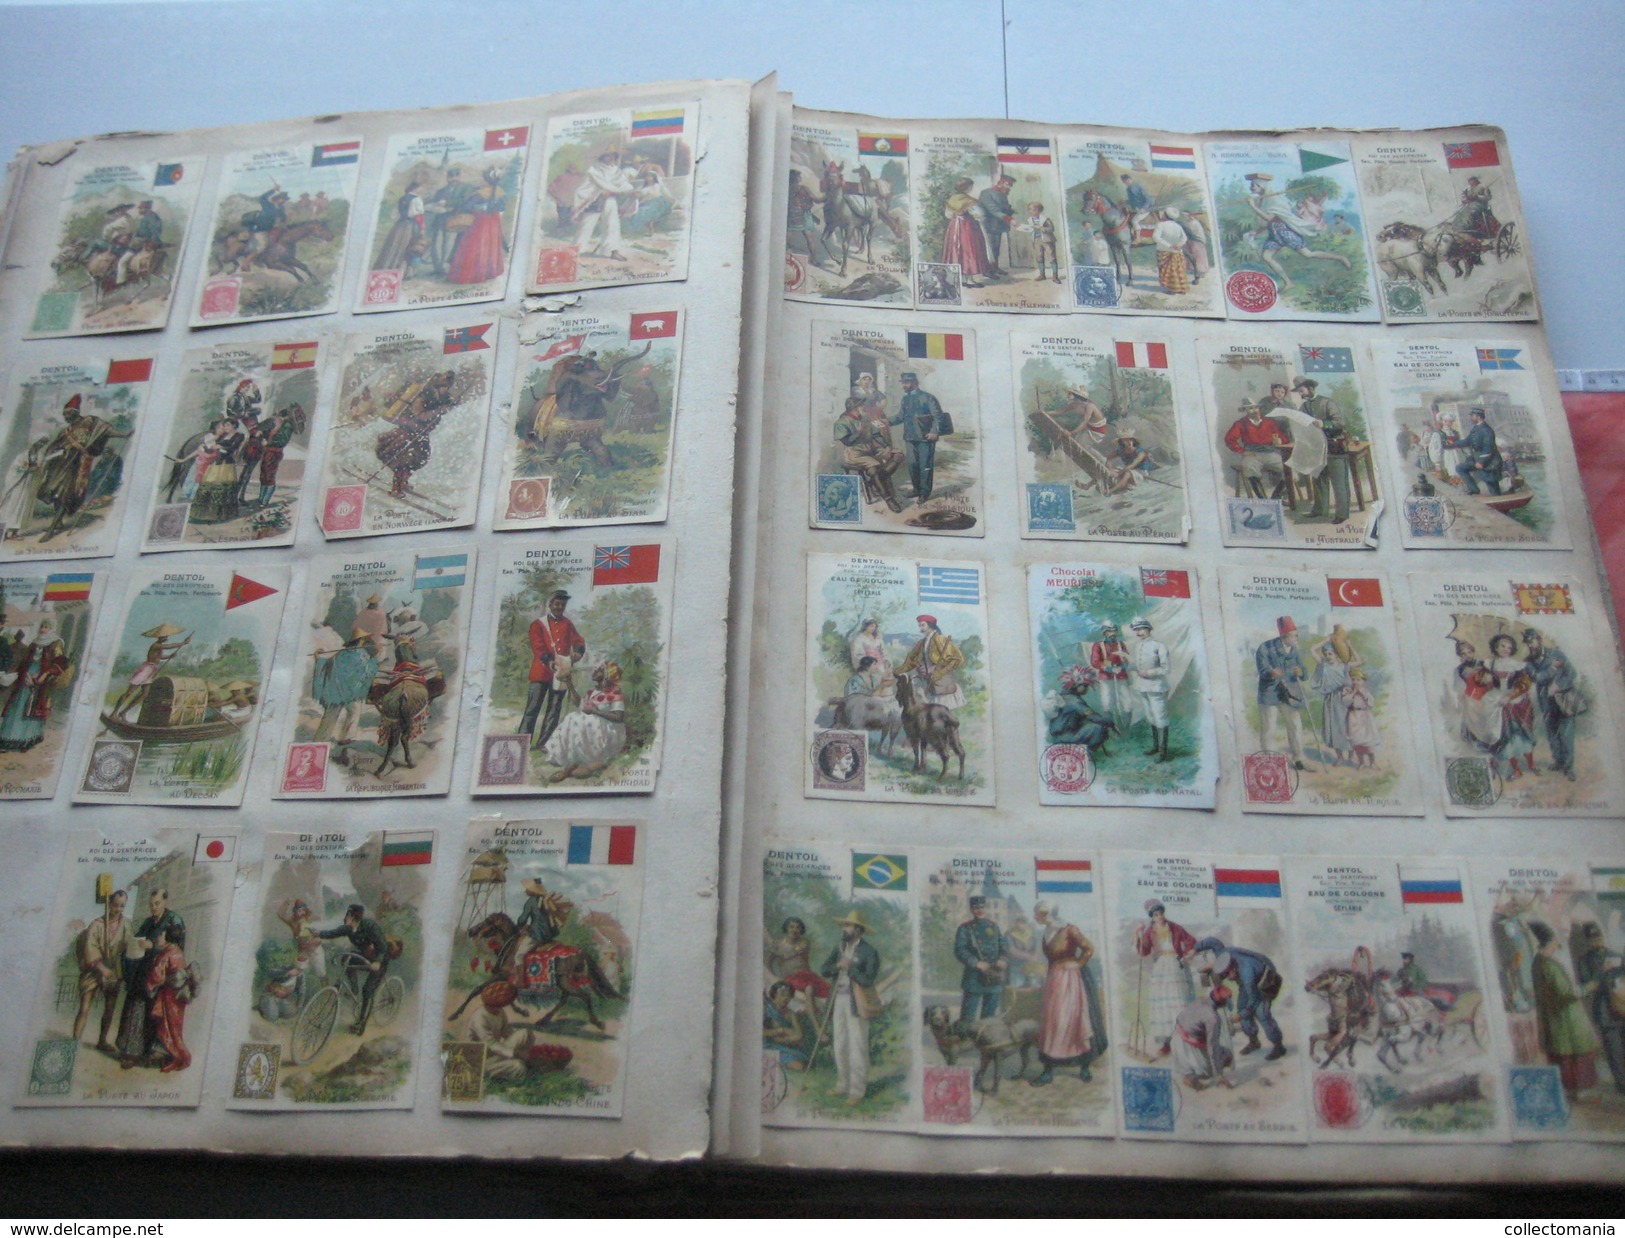 tres ancien epaix (dikke) Album chromos Glanzbilder far before 1900 also advertising cards, expo 1900 & postman SERIE